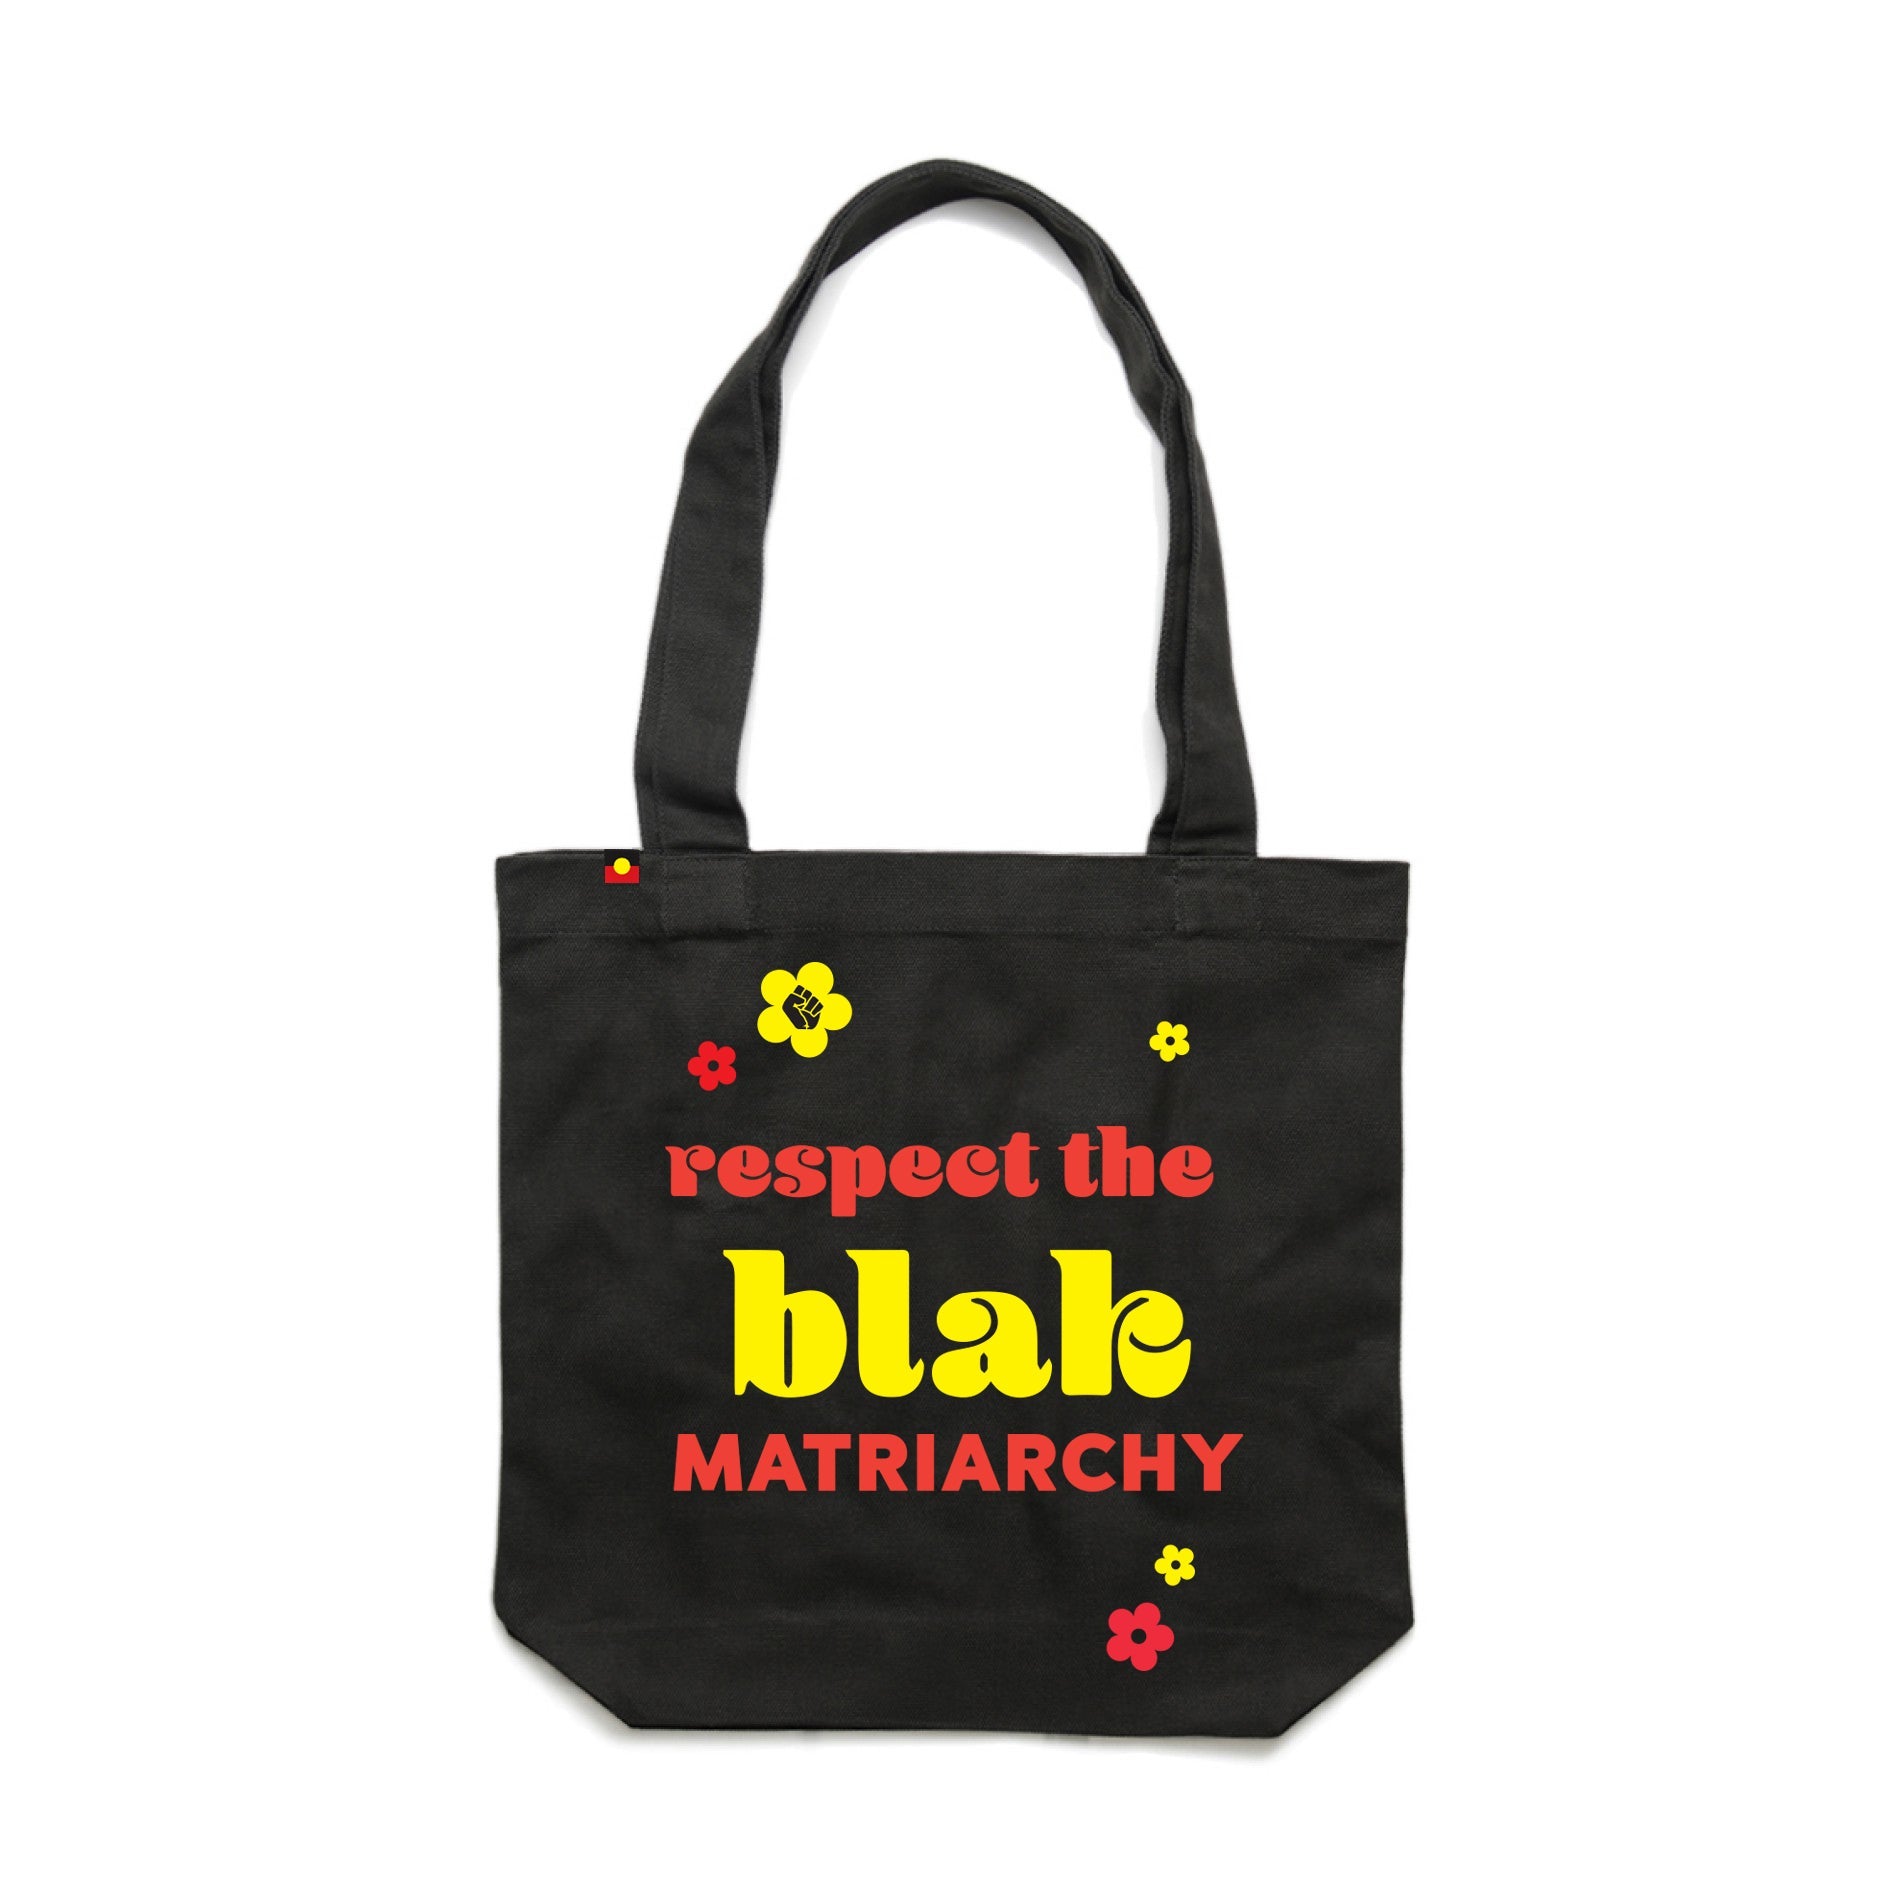 Respect the blak matriarchy vintage tote bag